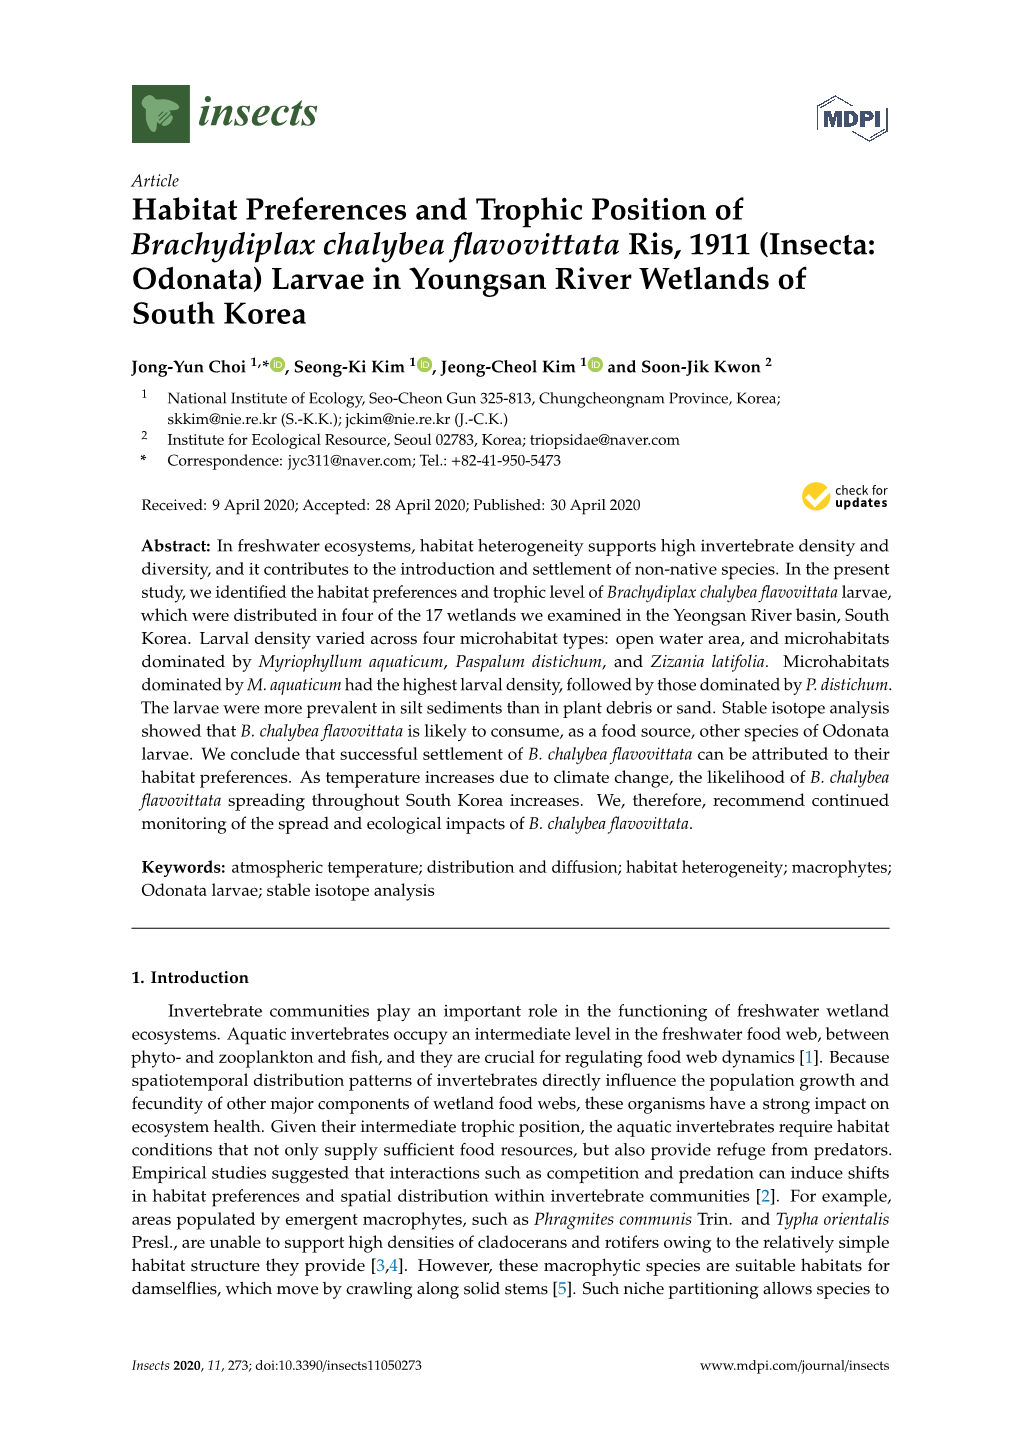 Habitat Preferences and Trophic Position of Brachydiplax Chalybea Flavovittata Ris, 1911